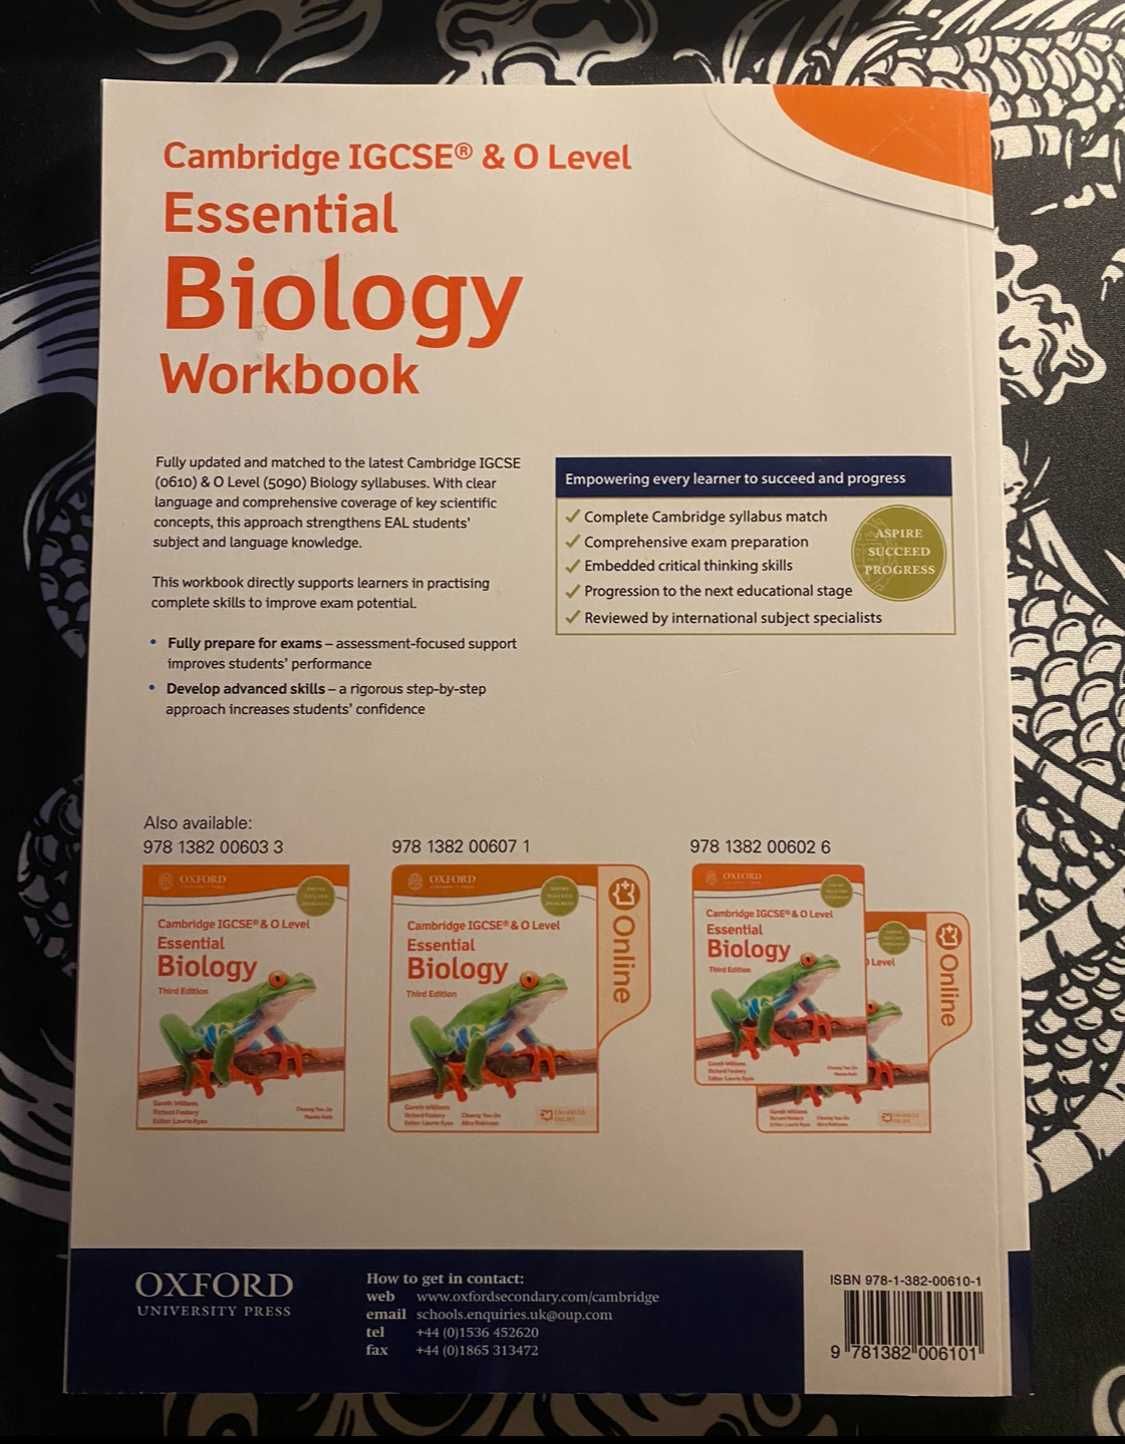 Cambridge IGCSE & O Level Essential Biology: Workbook (Third Edition)